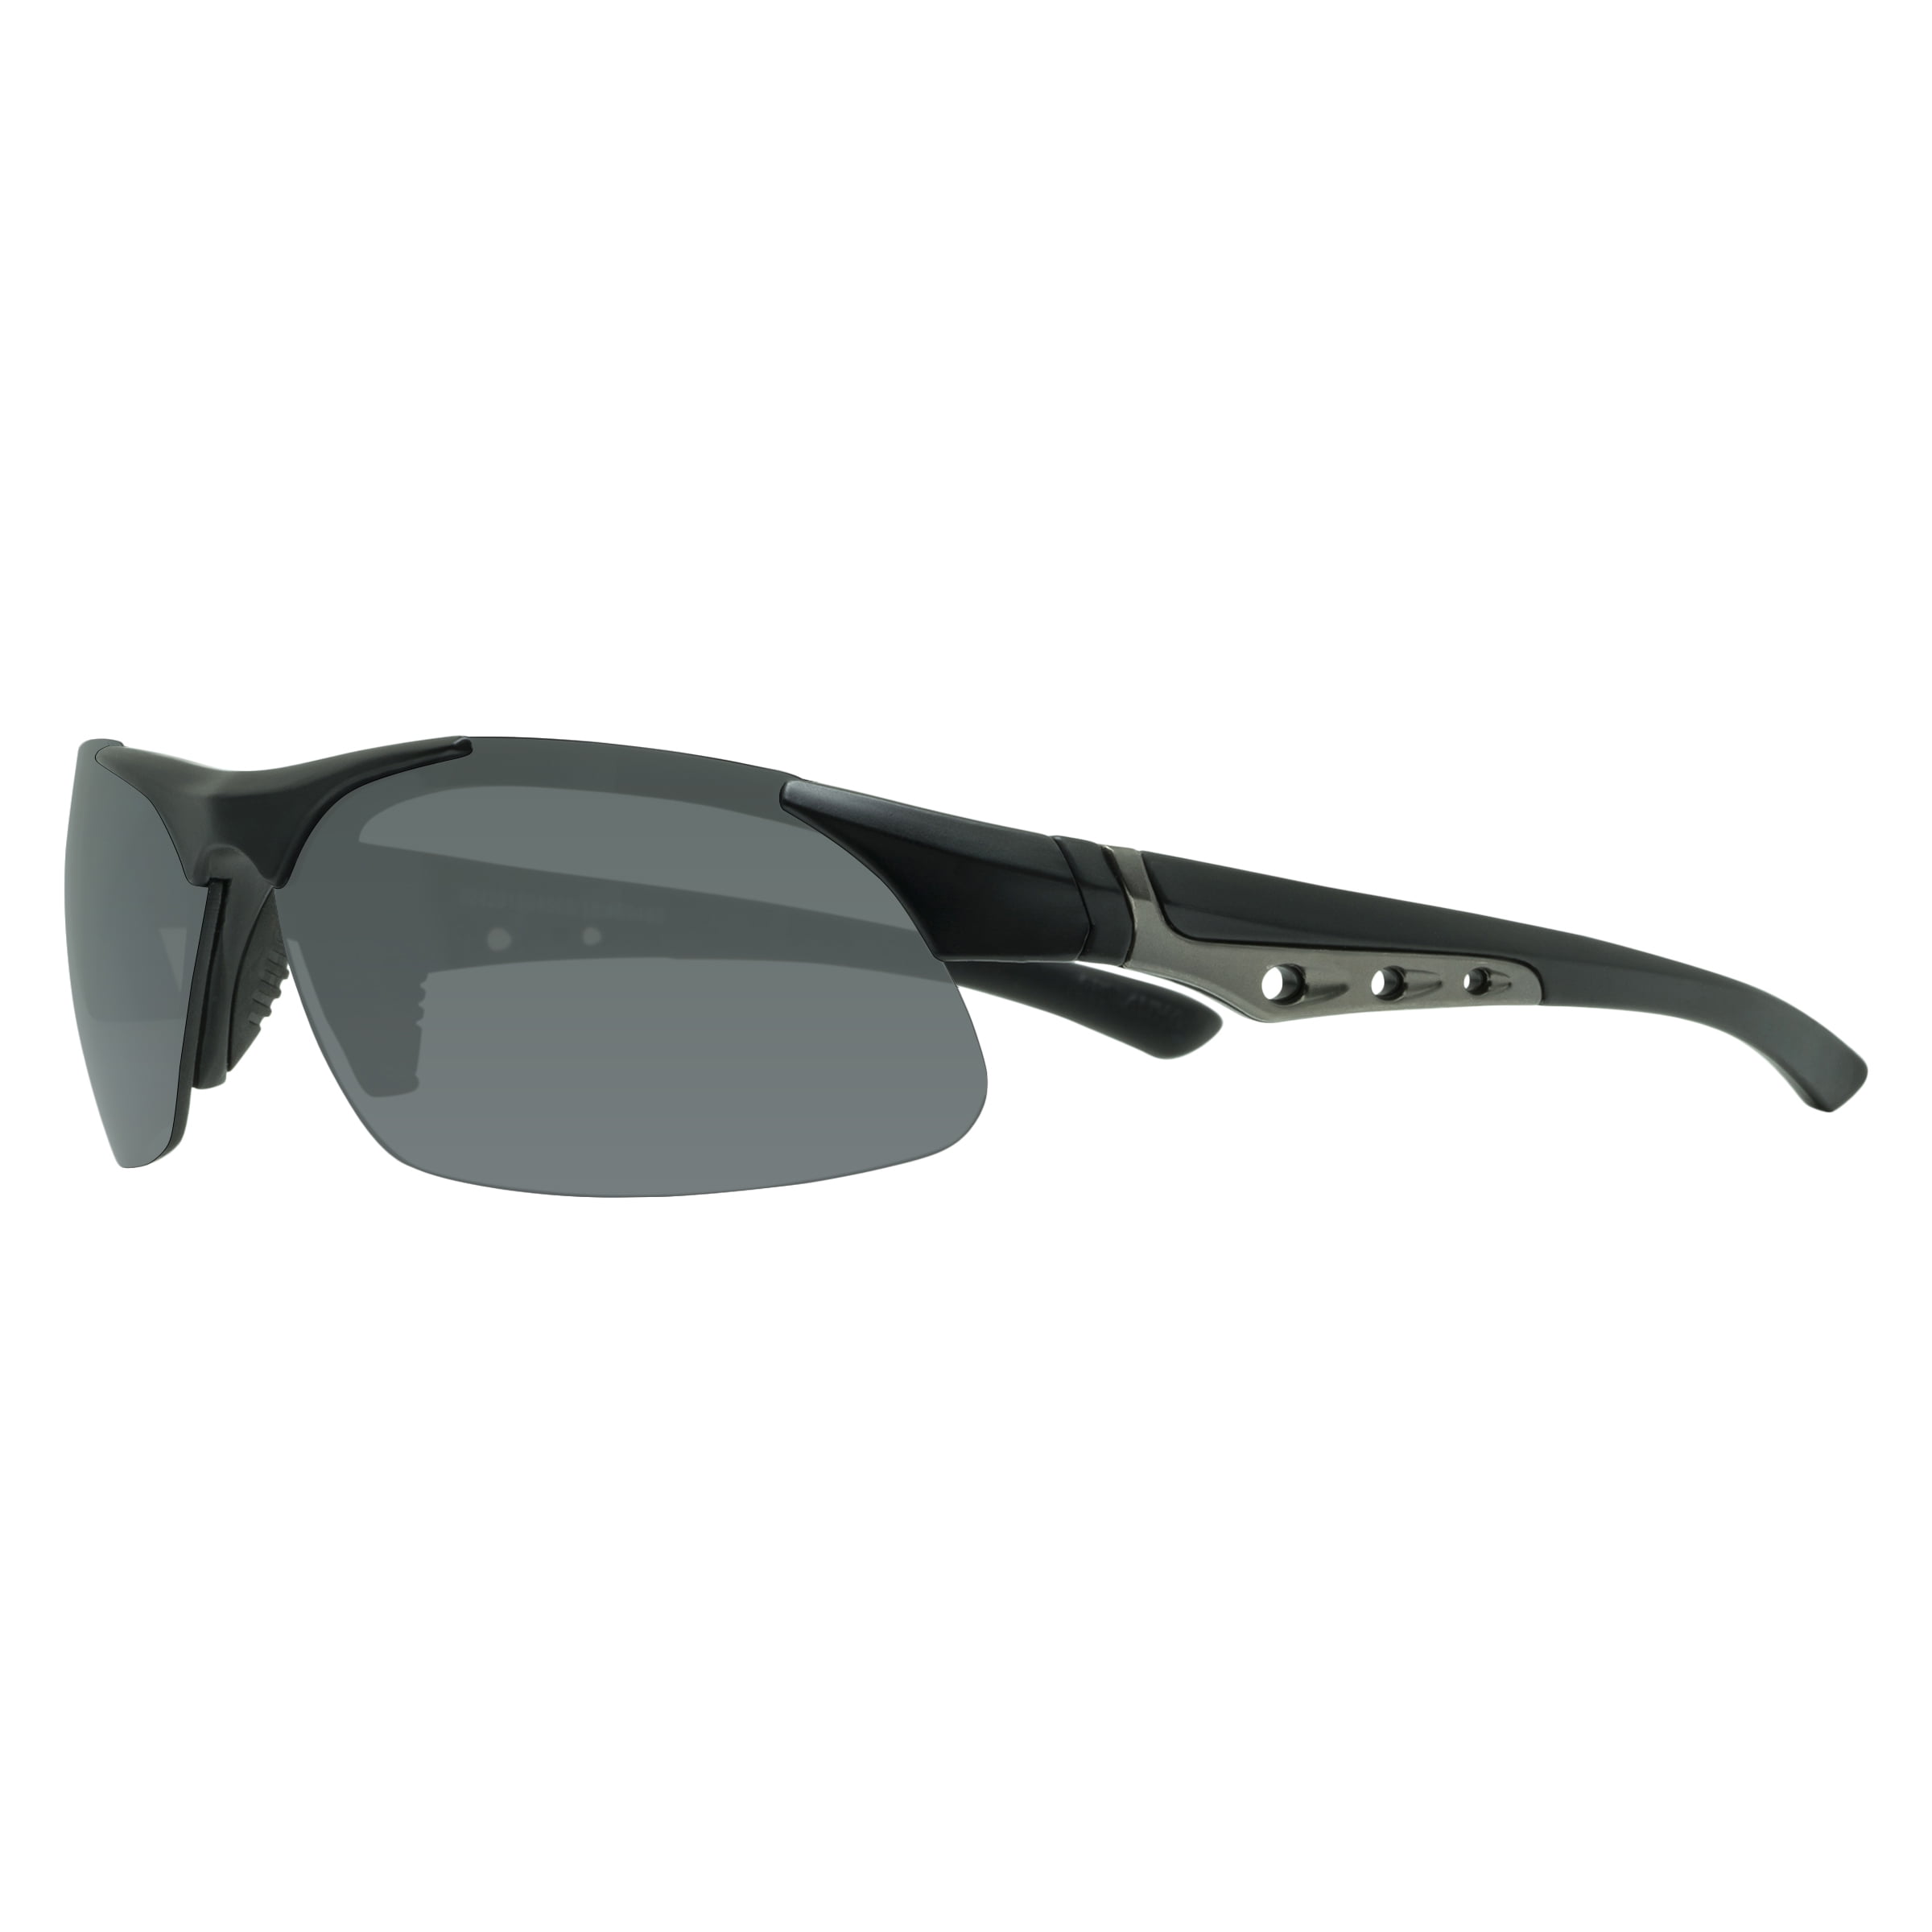 Piranha Eyewear Encore Half Frame Sport Sunglasses for Men with Smoke Lens  